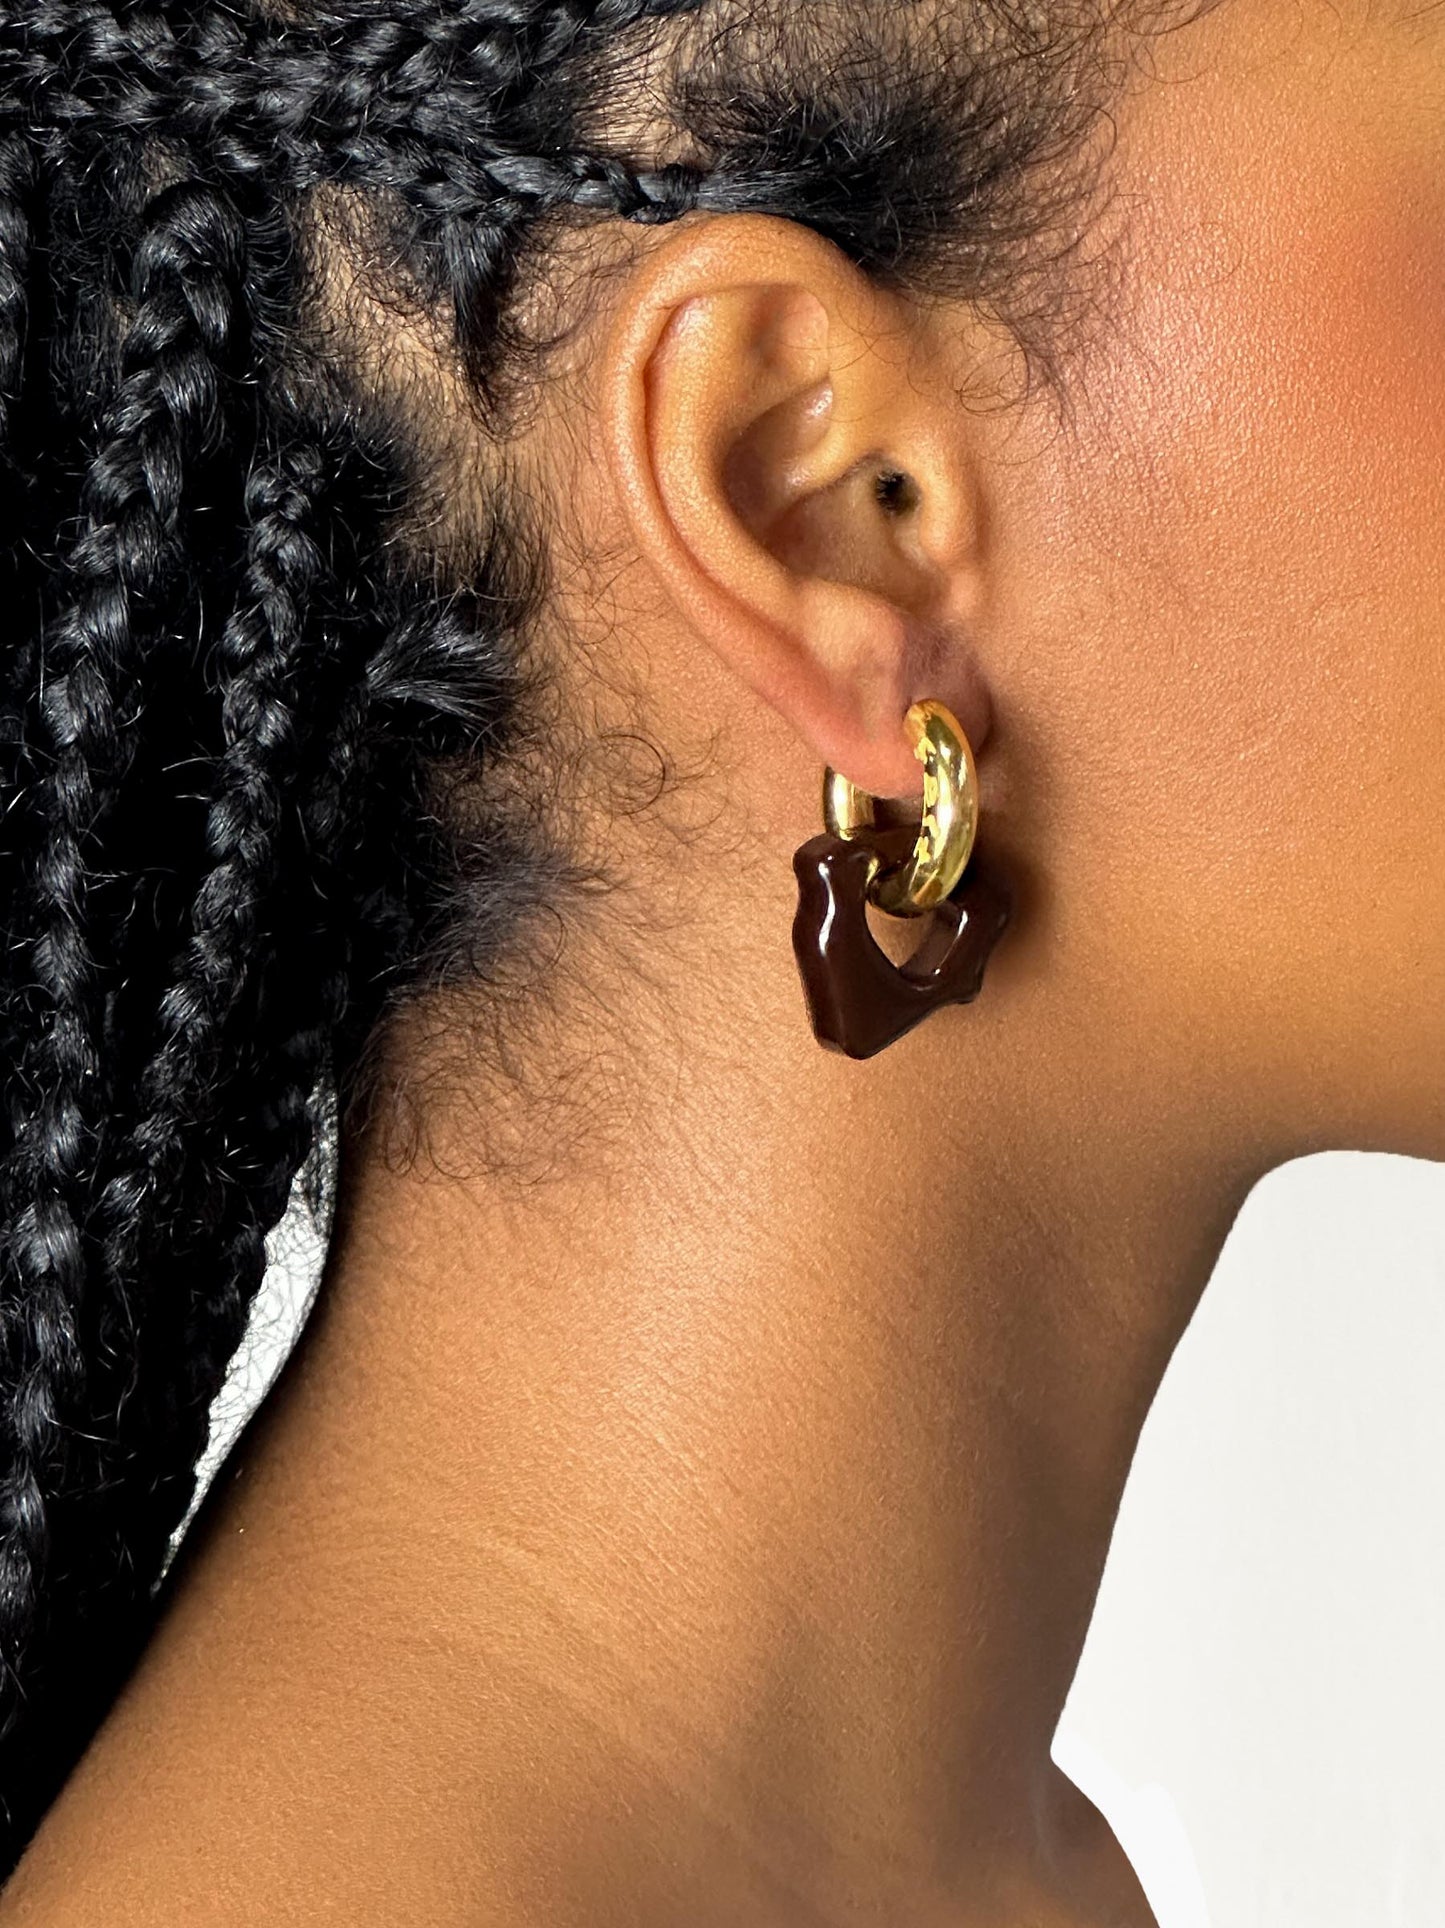 Ora brown gold earring (pair)